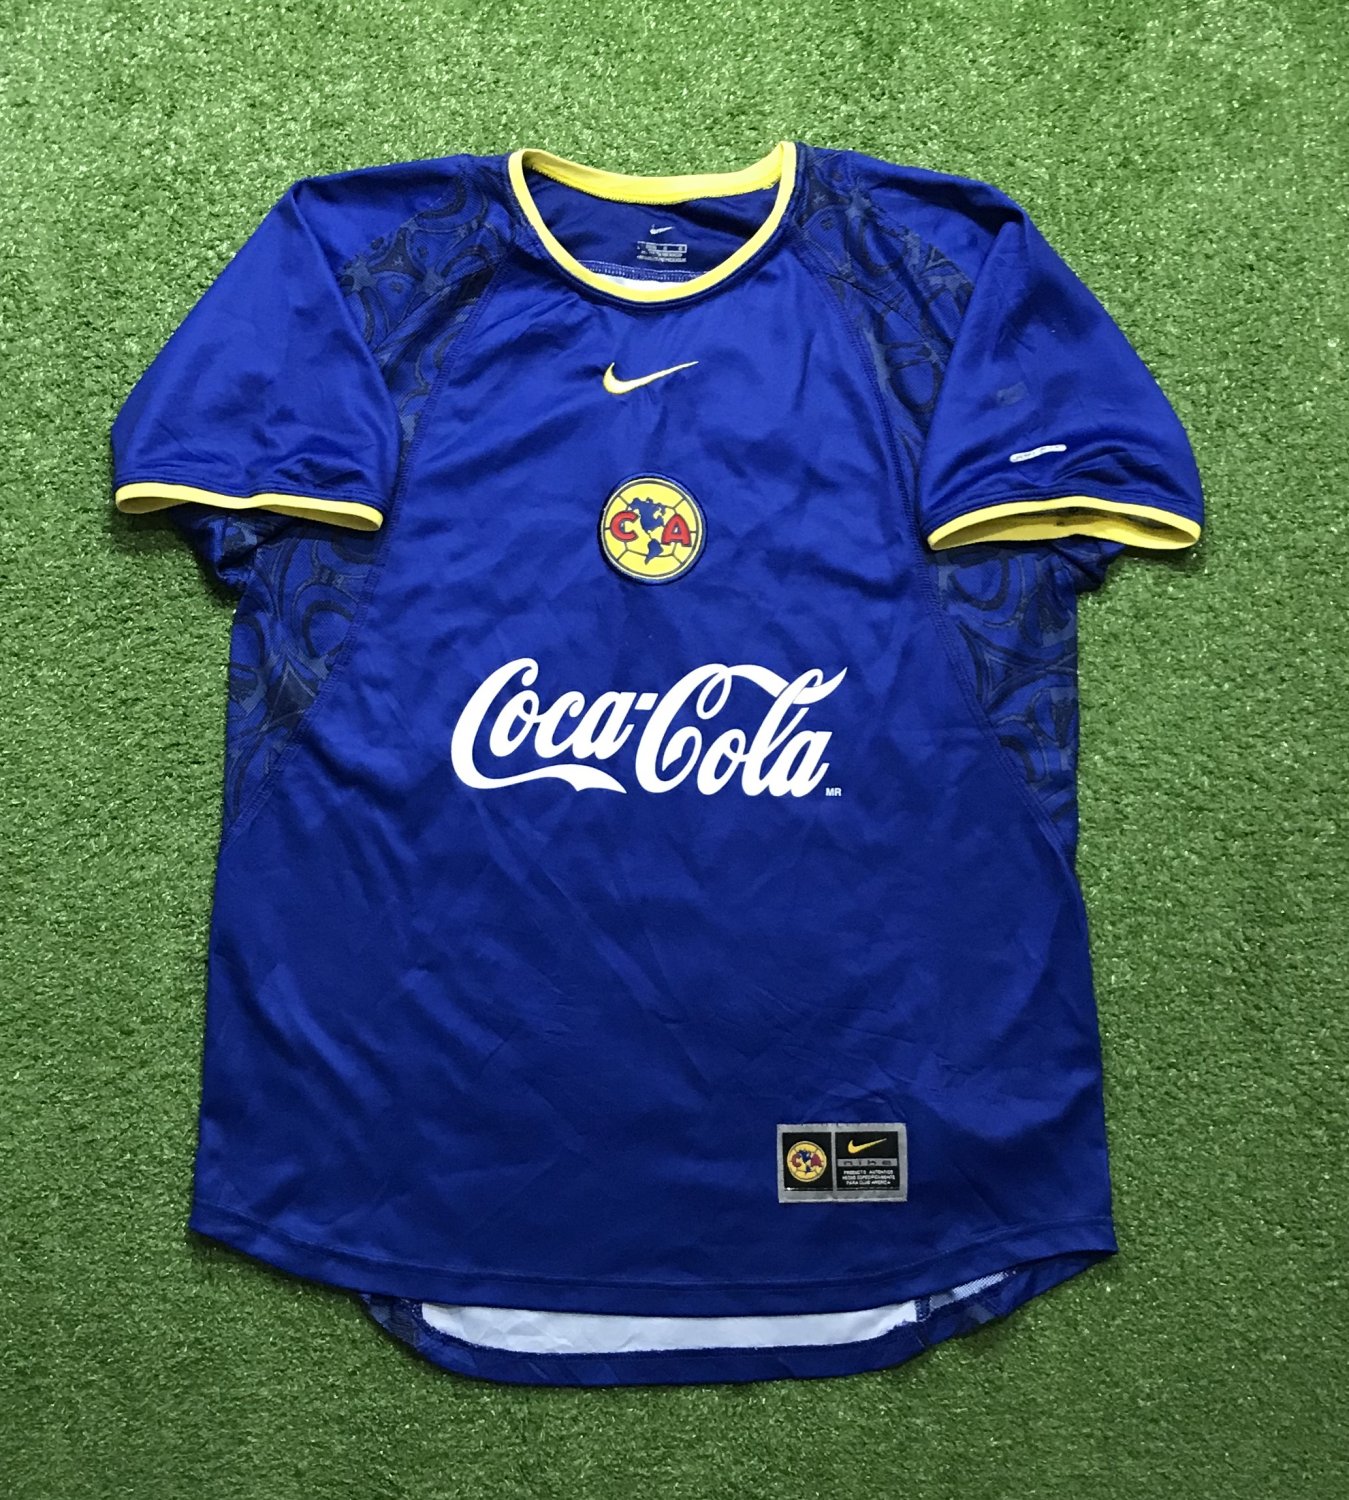 Club America Away football shirt 2002 - 2003. Sponsored by Coca Cola